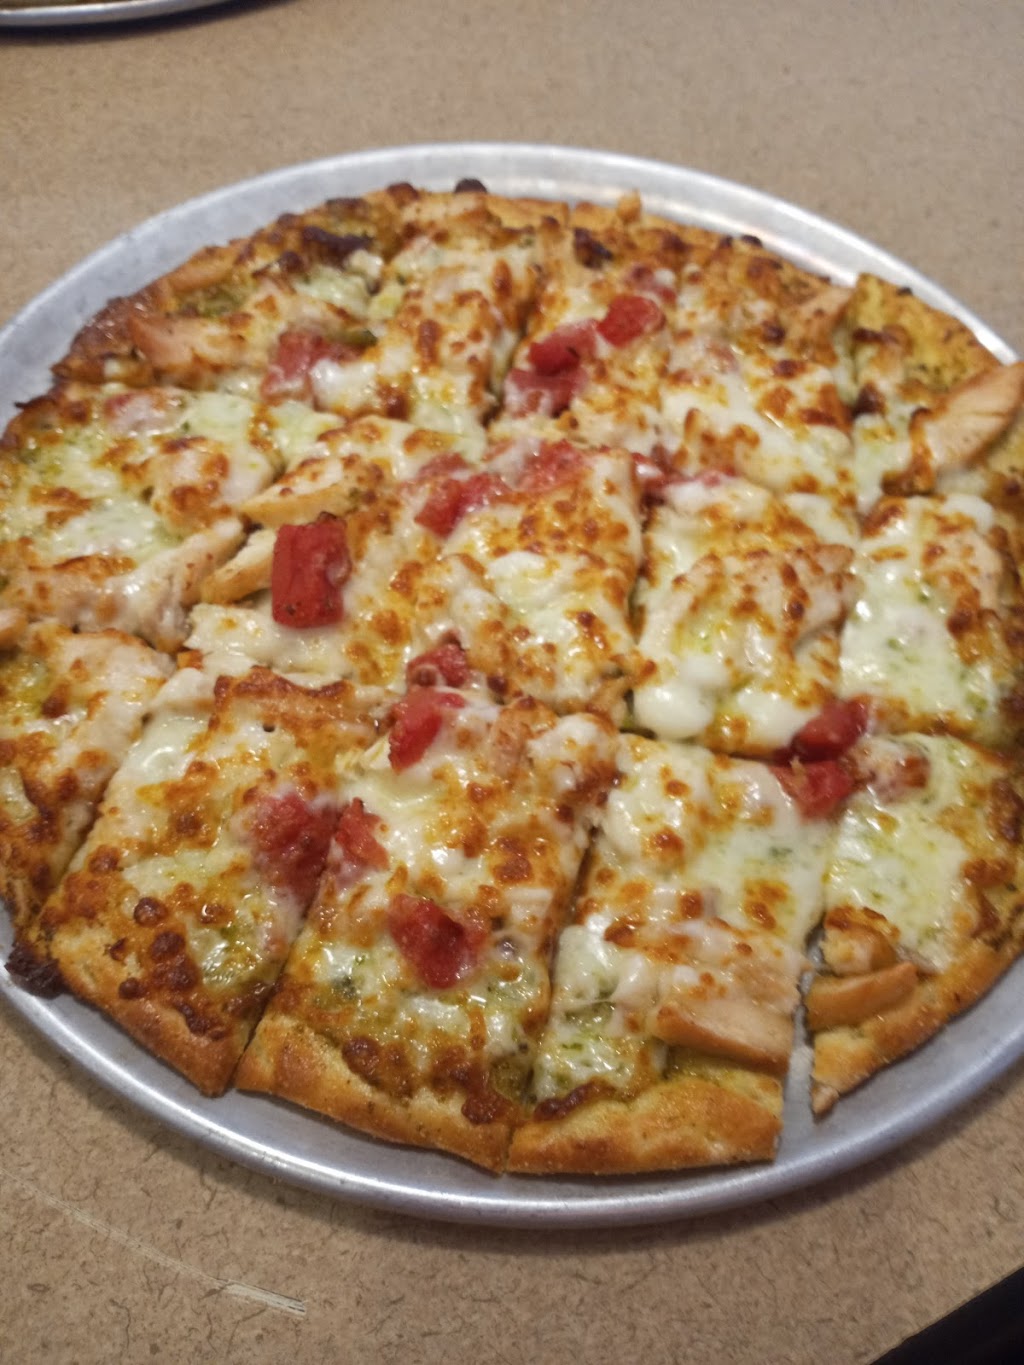 Stevi Bs Pizza Buffet | 7003 Concourse Pkwy, Douglasville, GA 30134, USA | Phone: (678) 229-5400